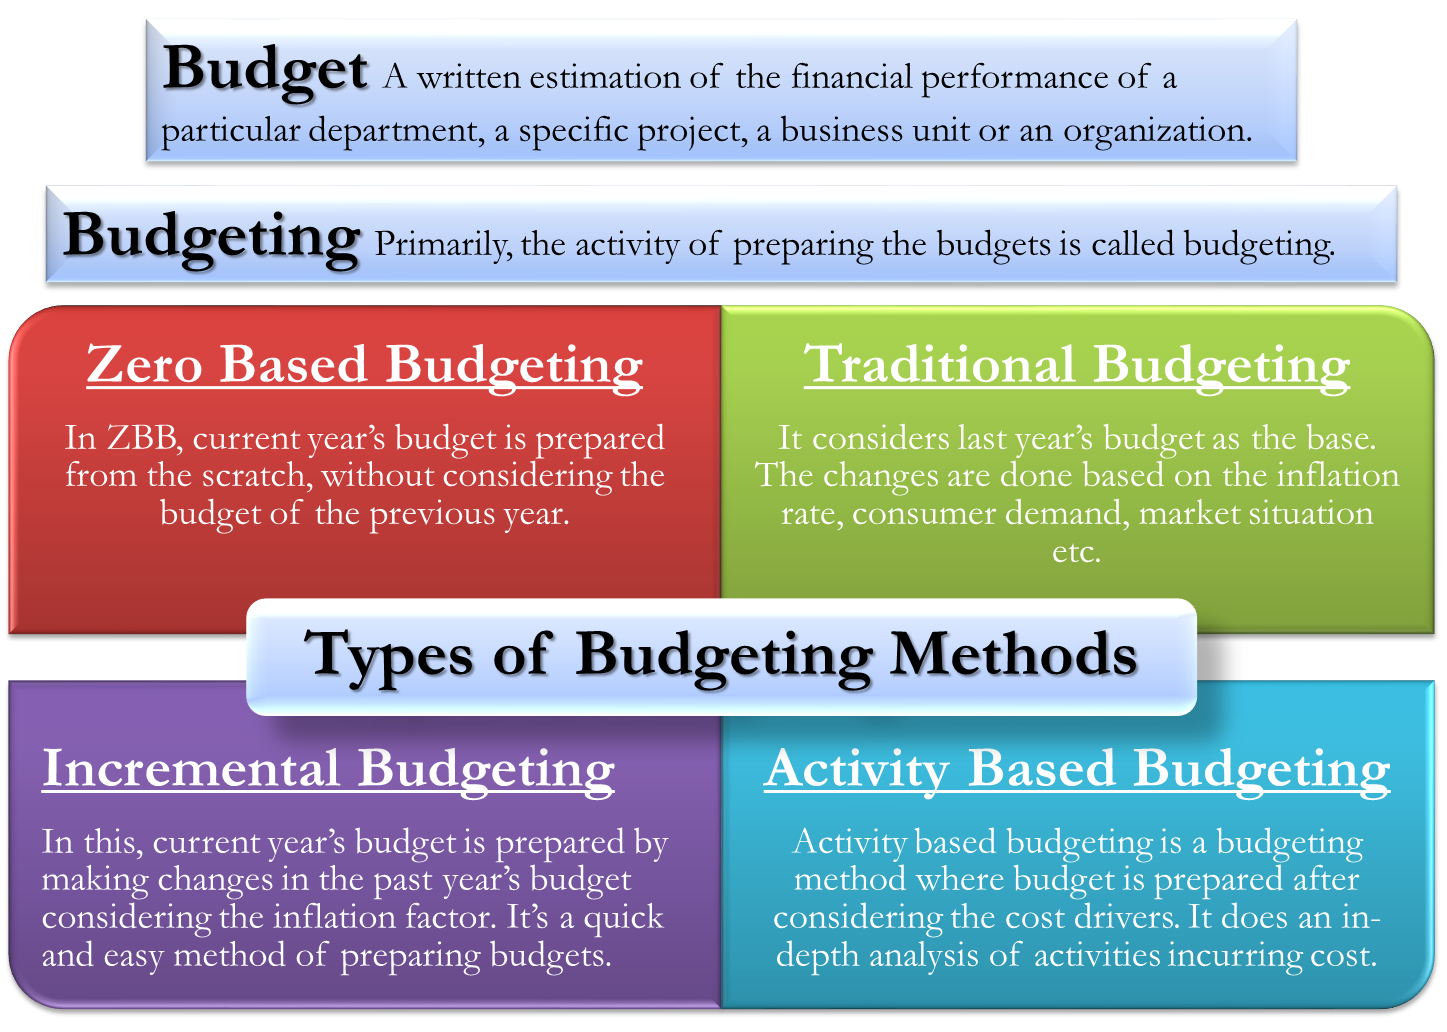 Public budgeting